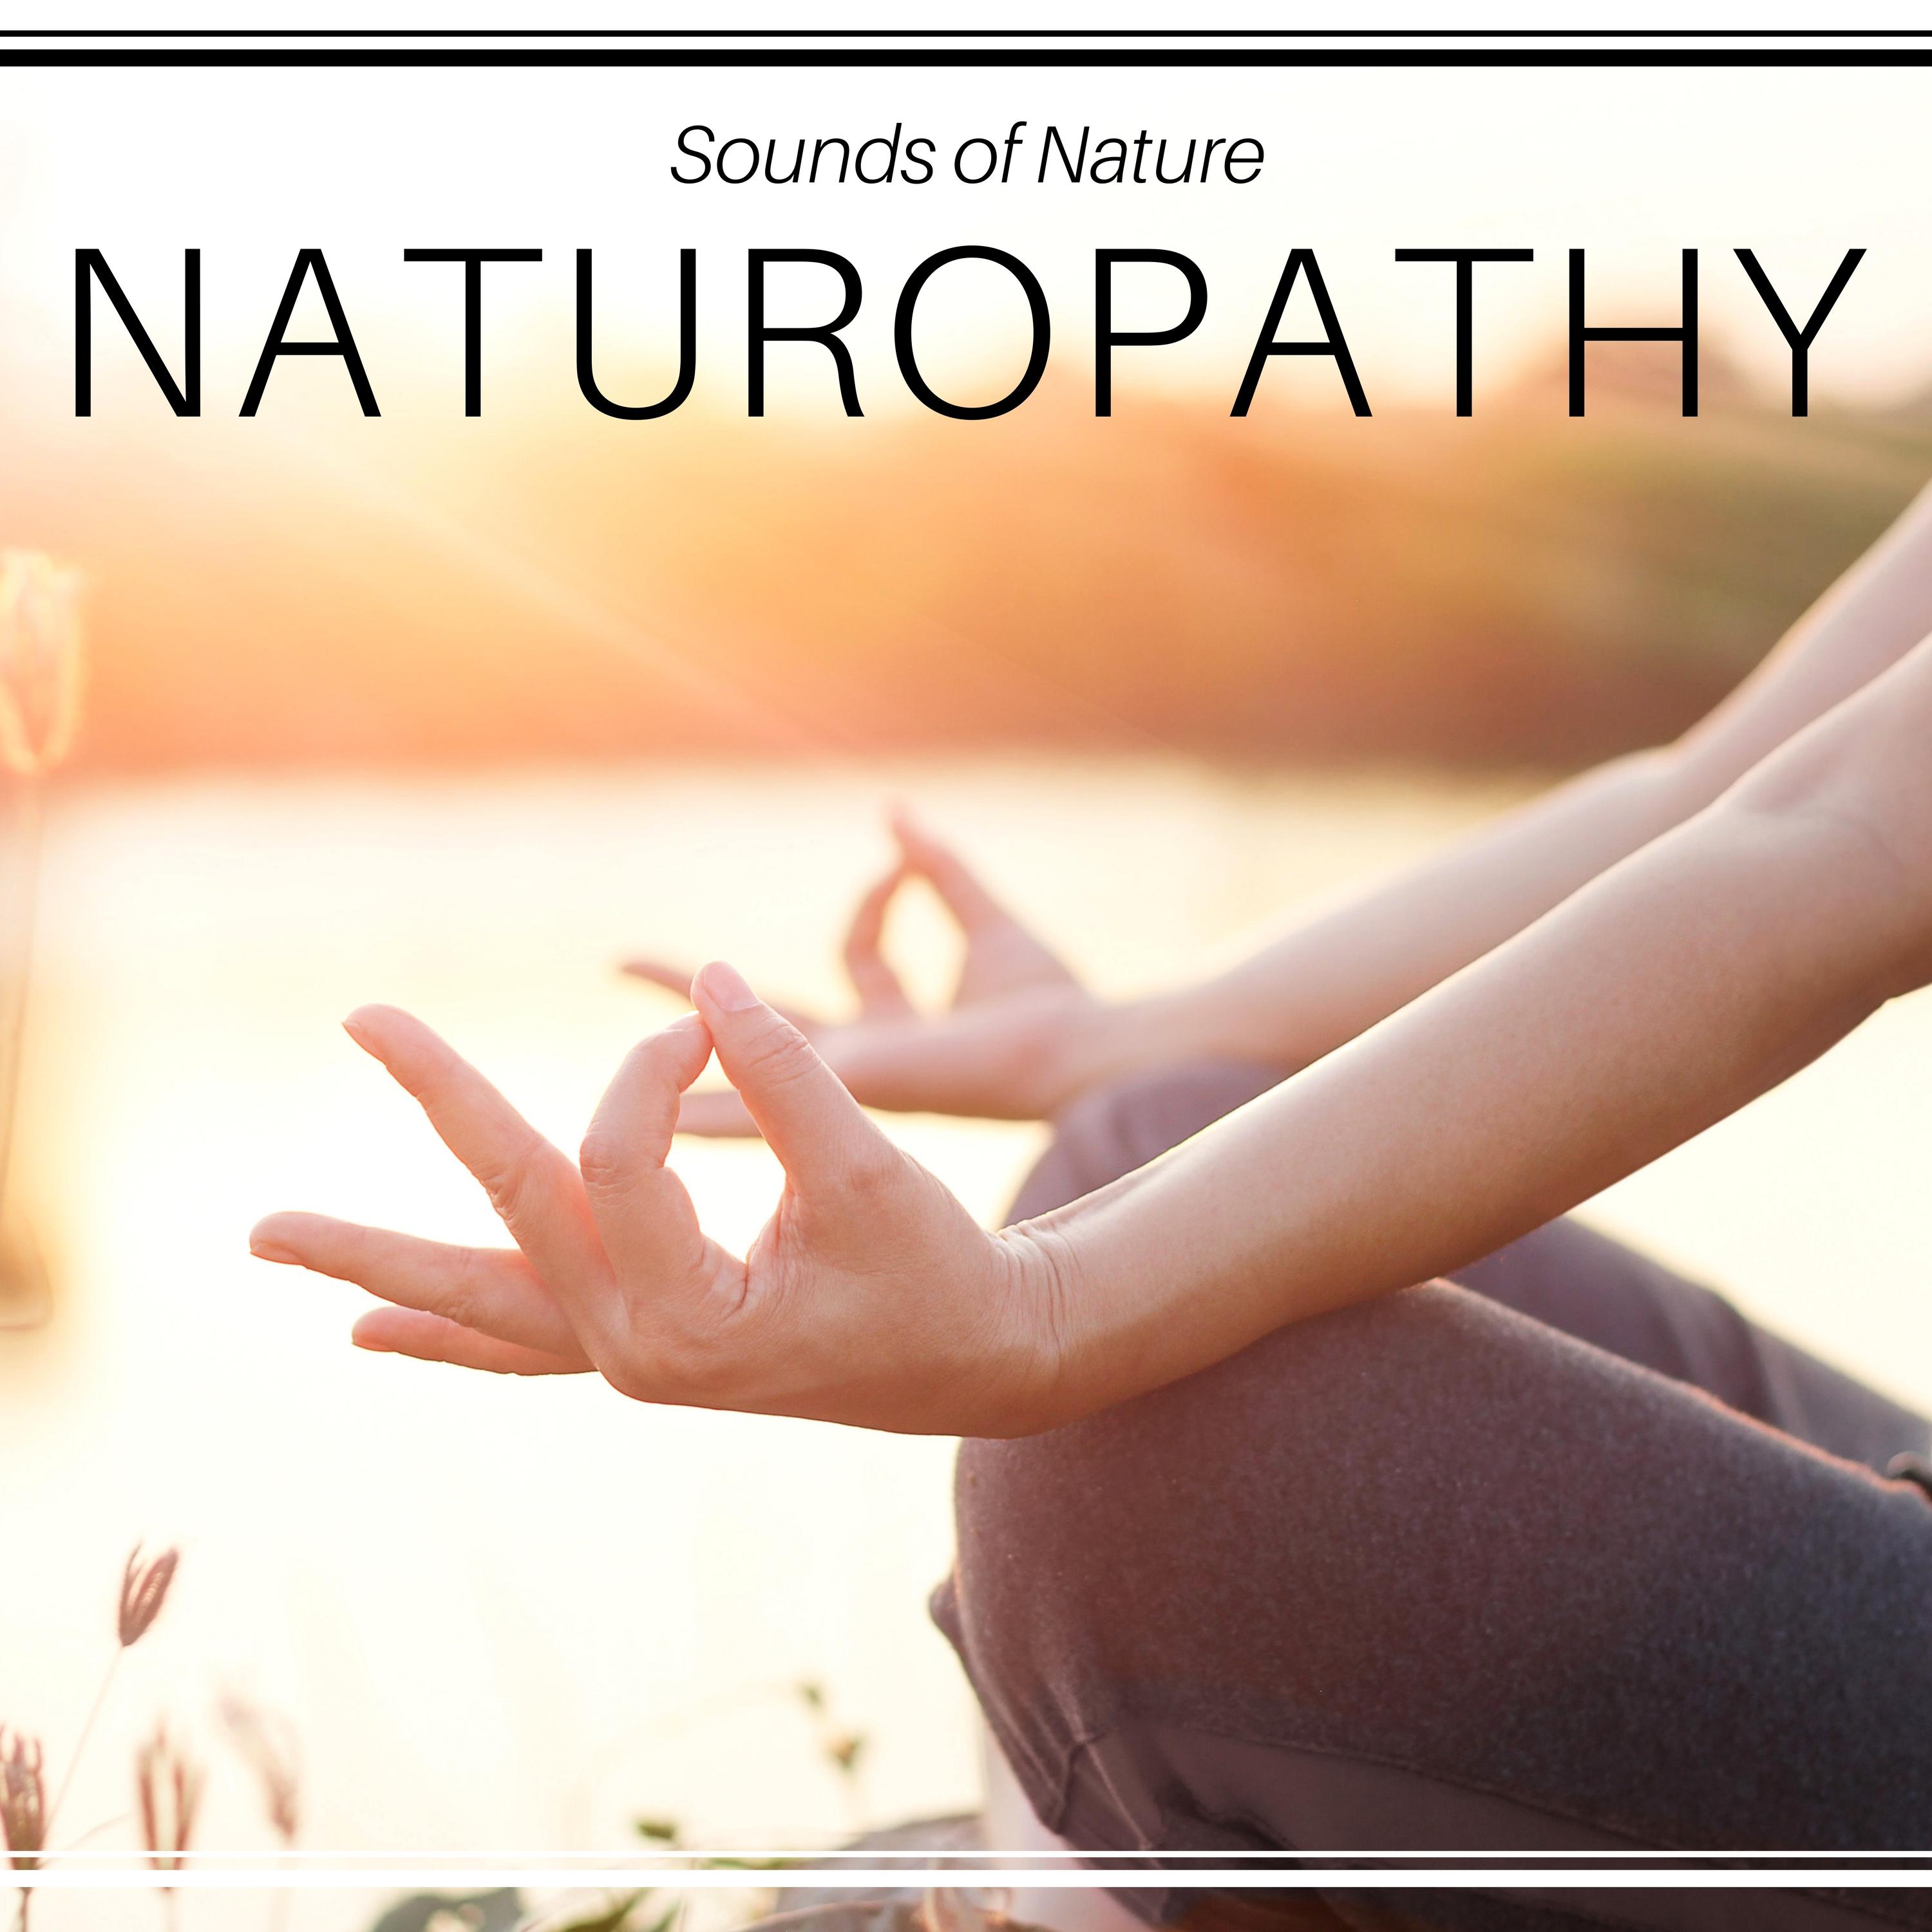 Naturopathy - Sounds of Nature, Biofeedback, Autogenic Training, Healthy Sleep, Breathing Exercises, Long Relaxation